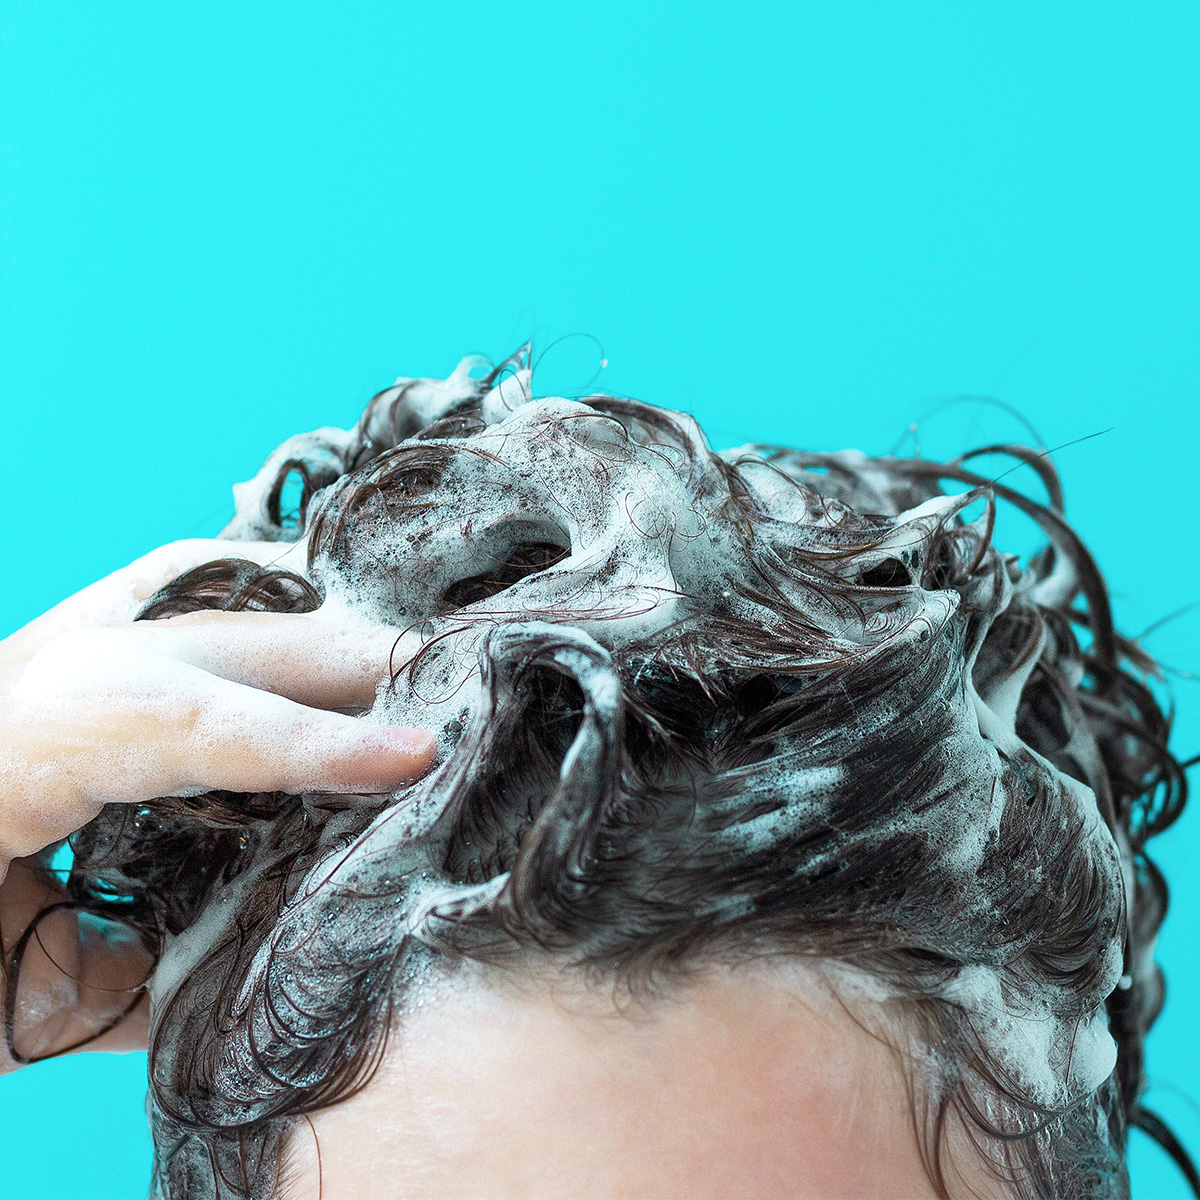 Soap Care - Hillman Reid Premium Skin and Hair Care Inc.